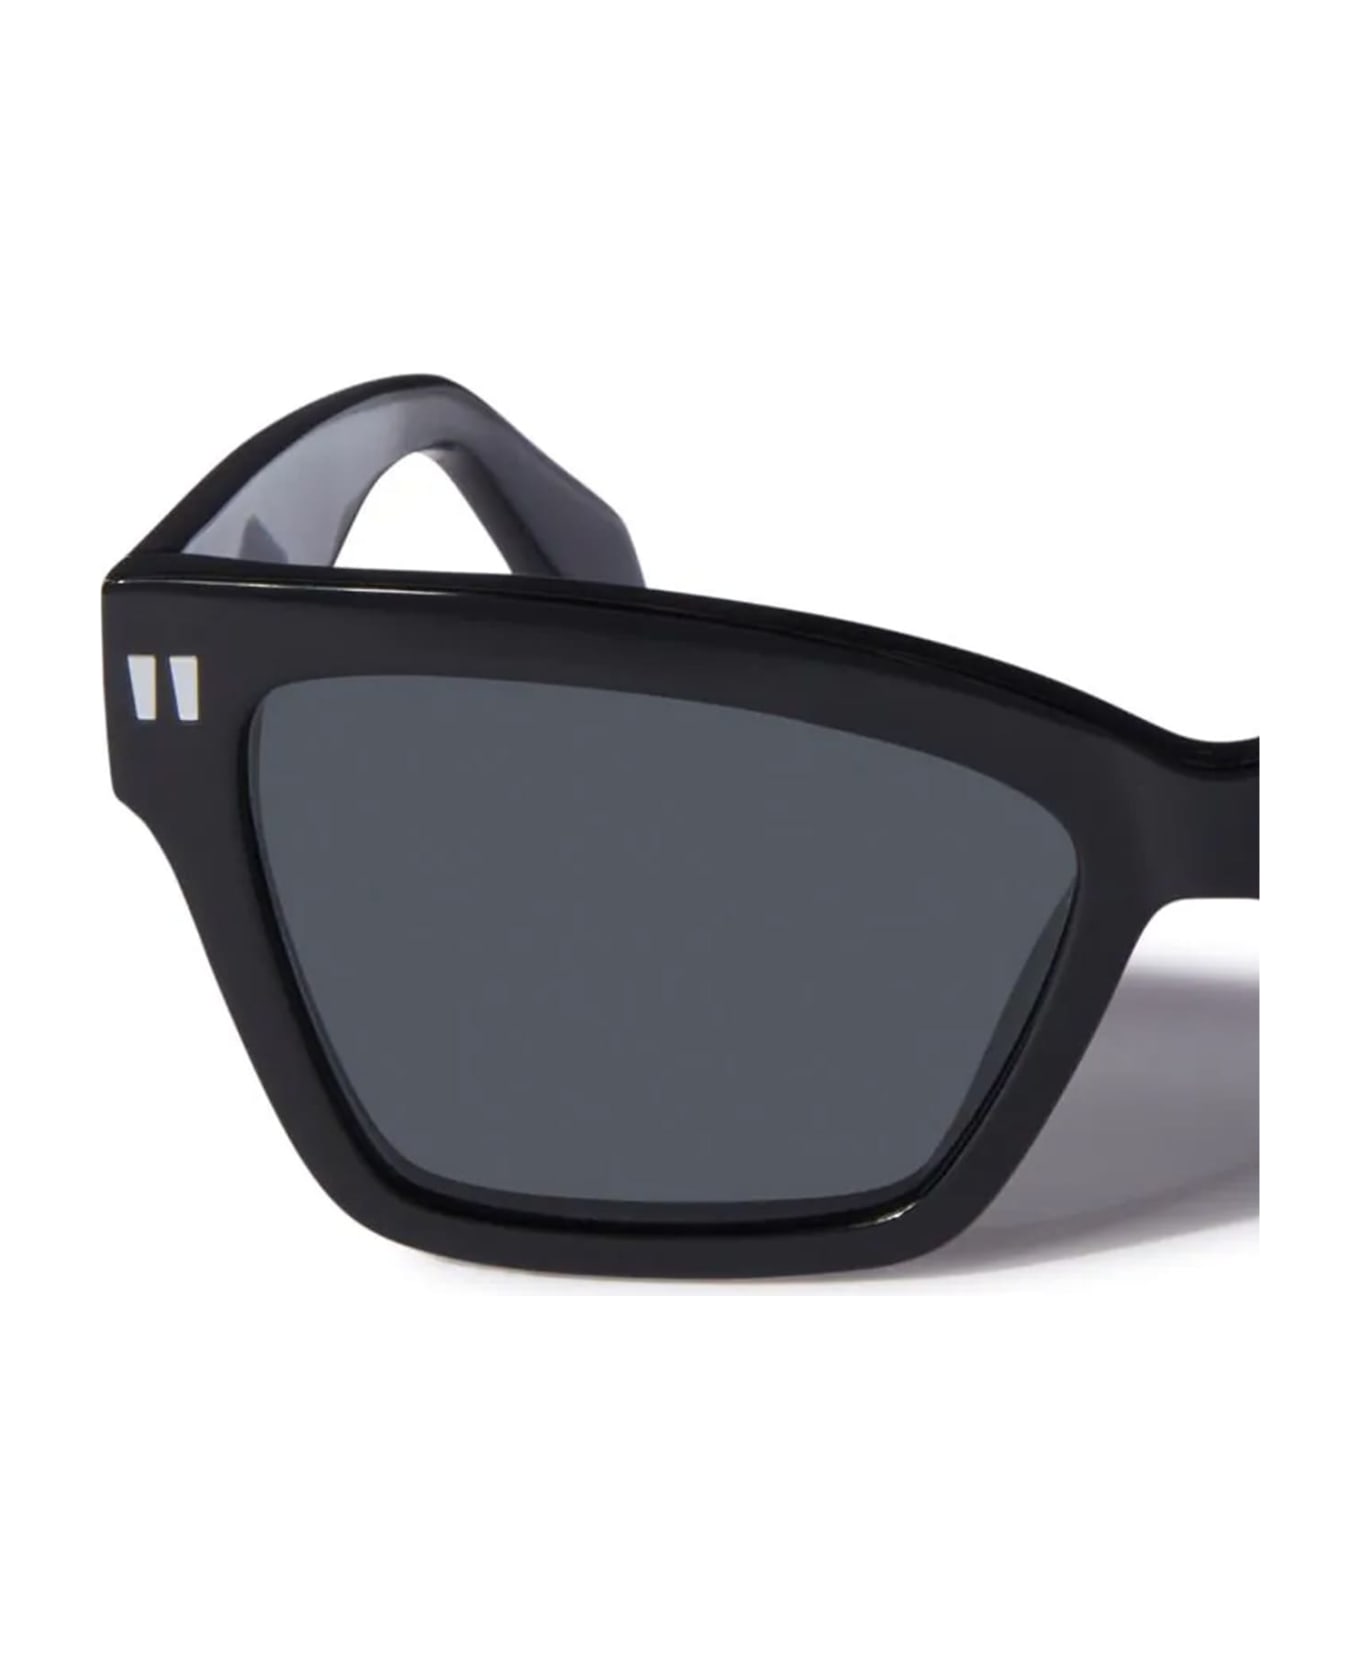 Off-White Cincinnati Sunglasses - Black